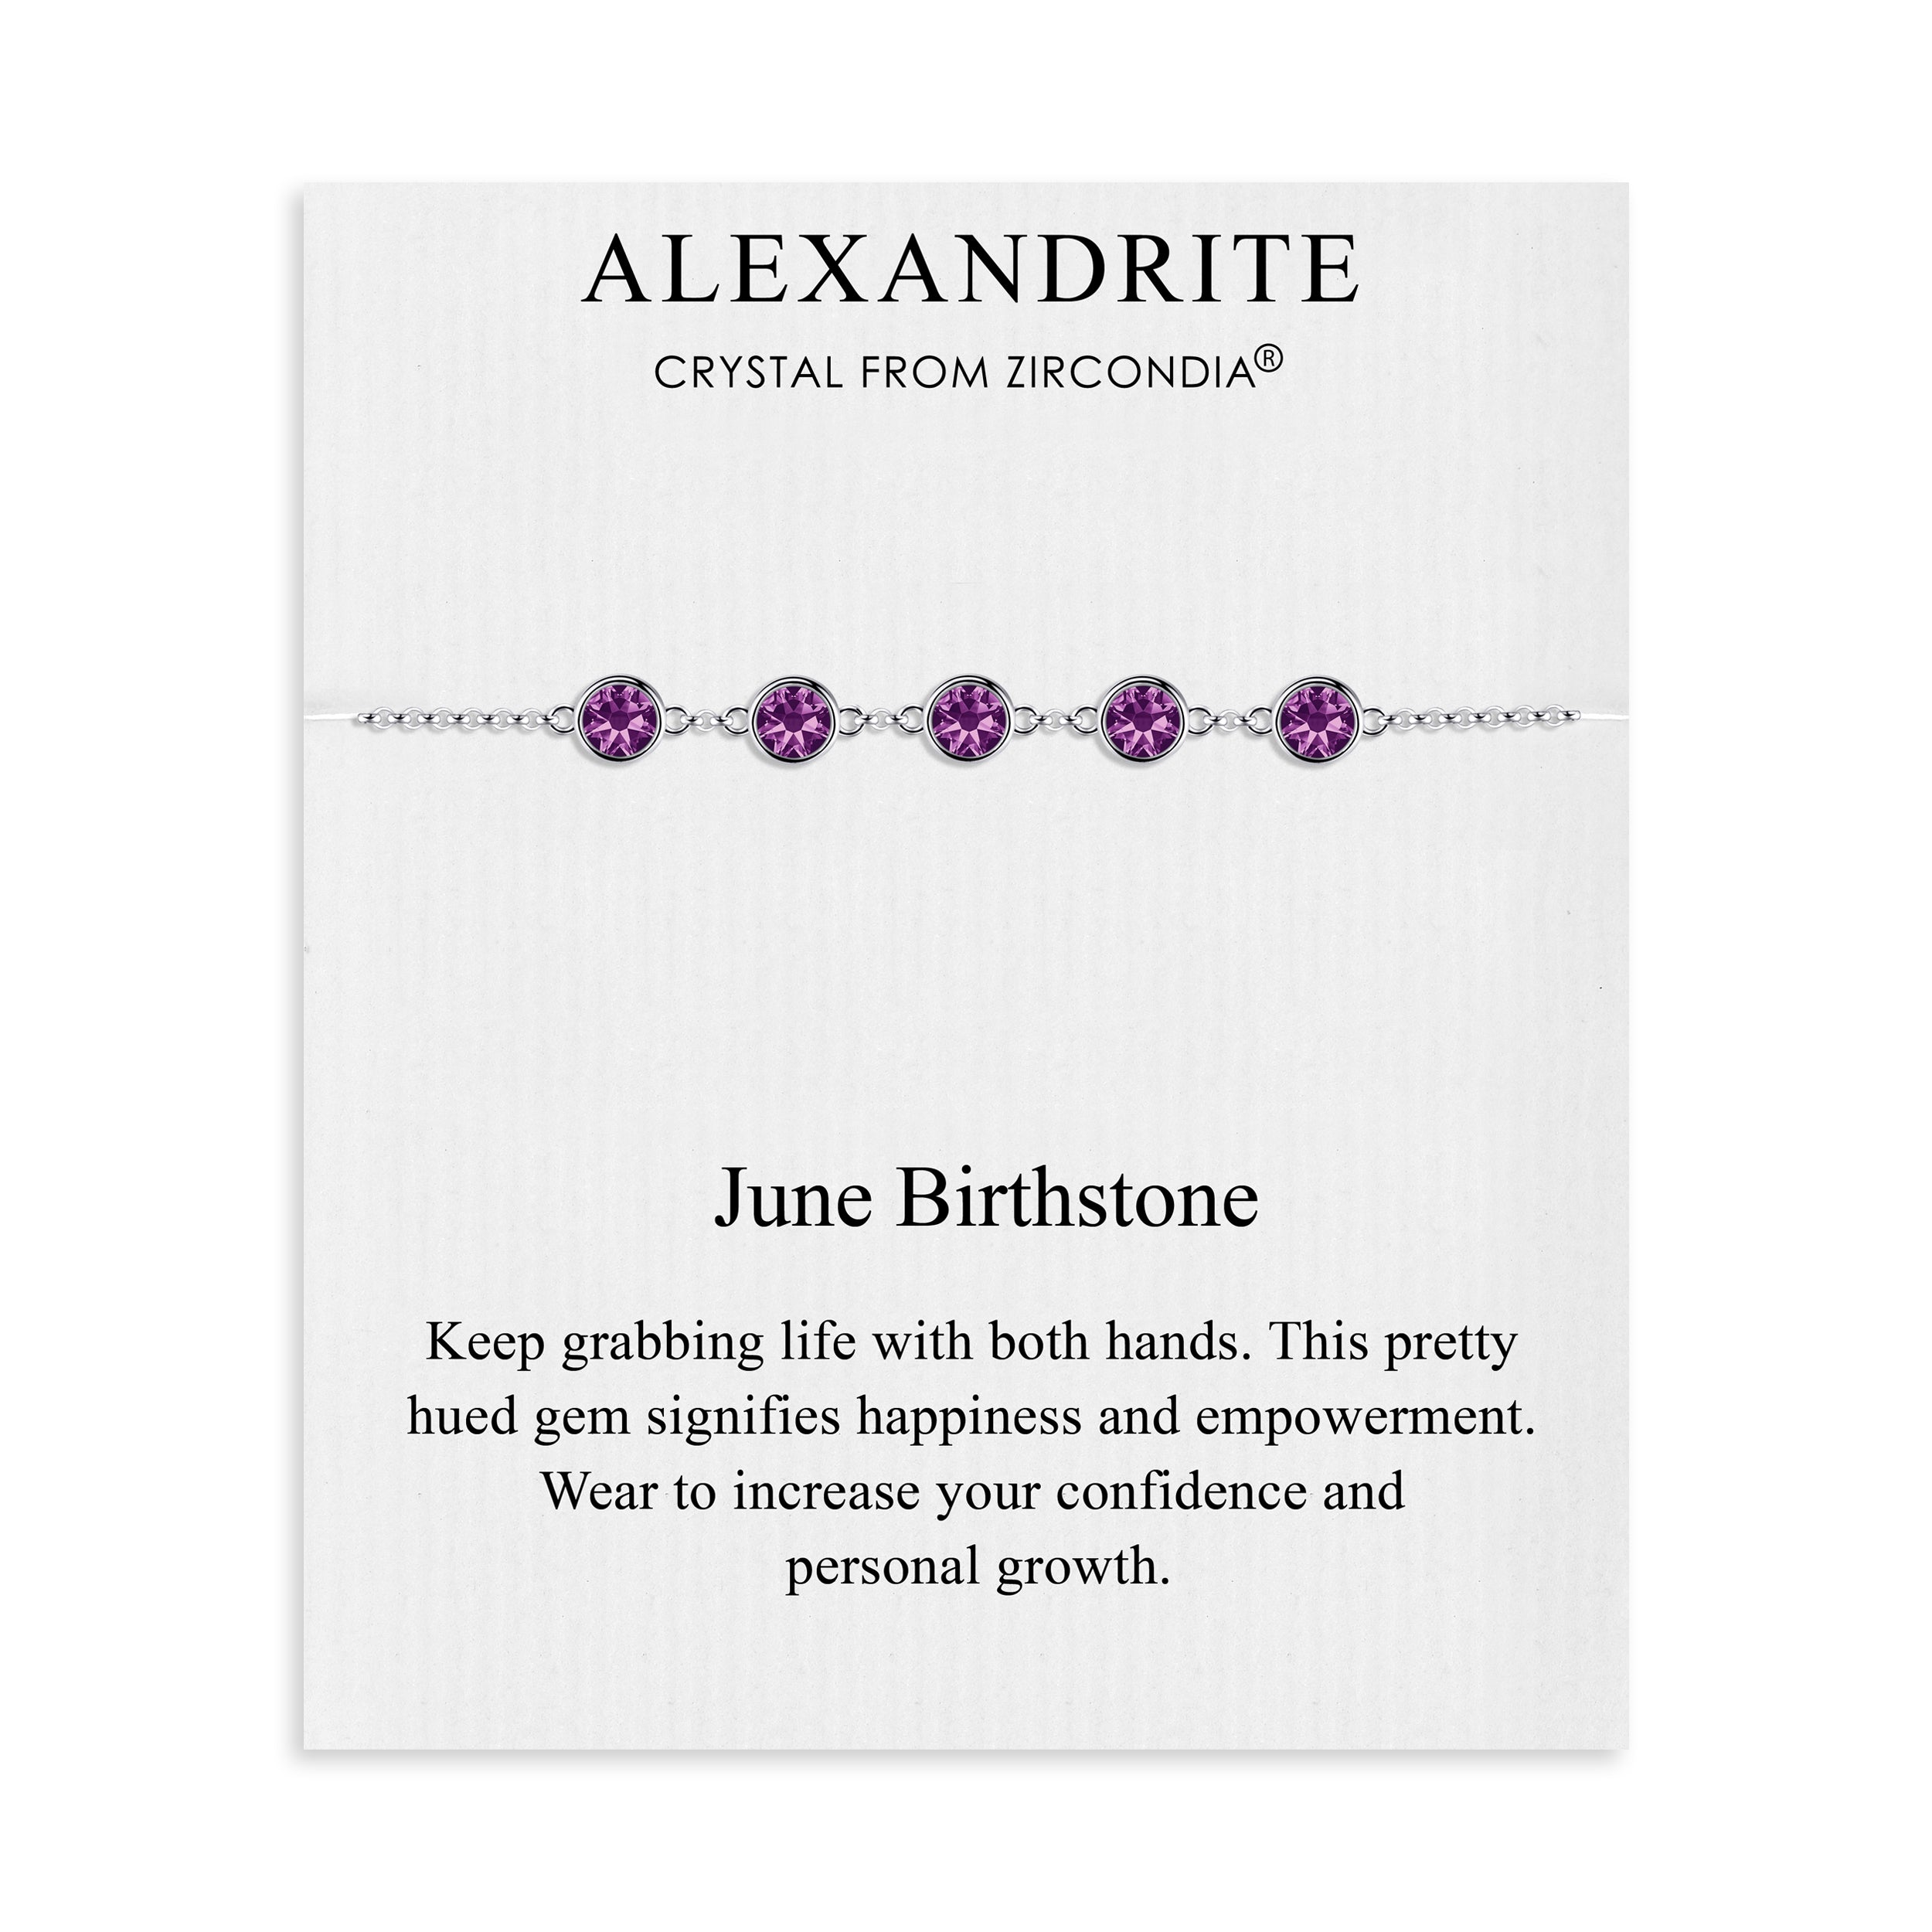 June Birthstone Bracelet Created with Alexandrite Zircondia® Crystals by Philip Jones Jewellery